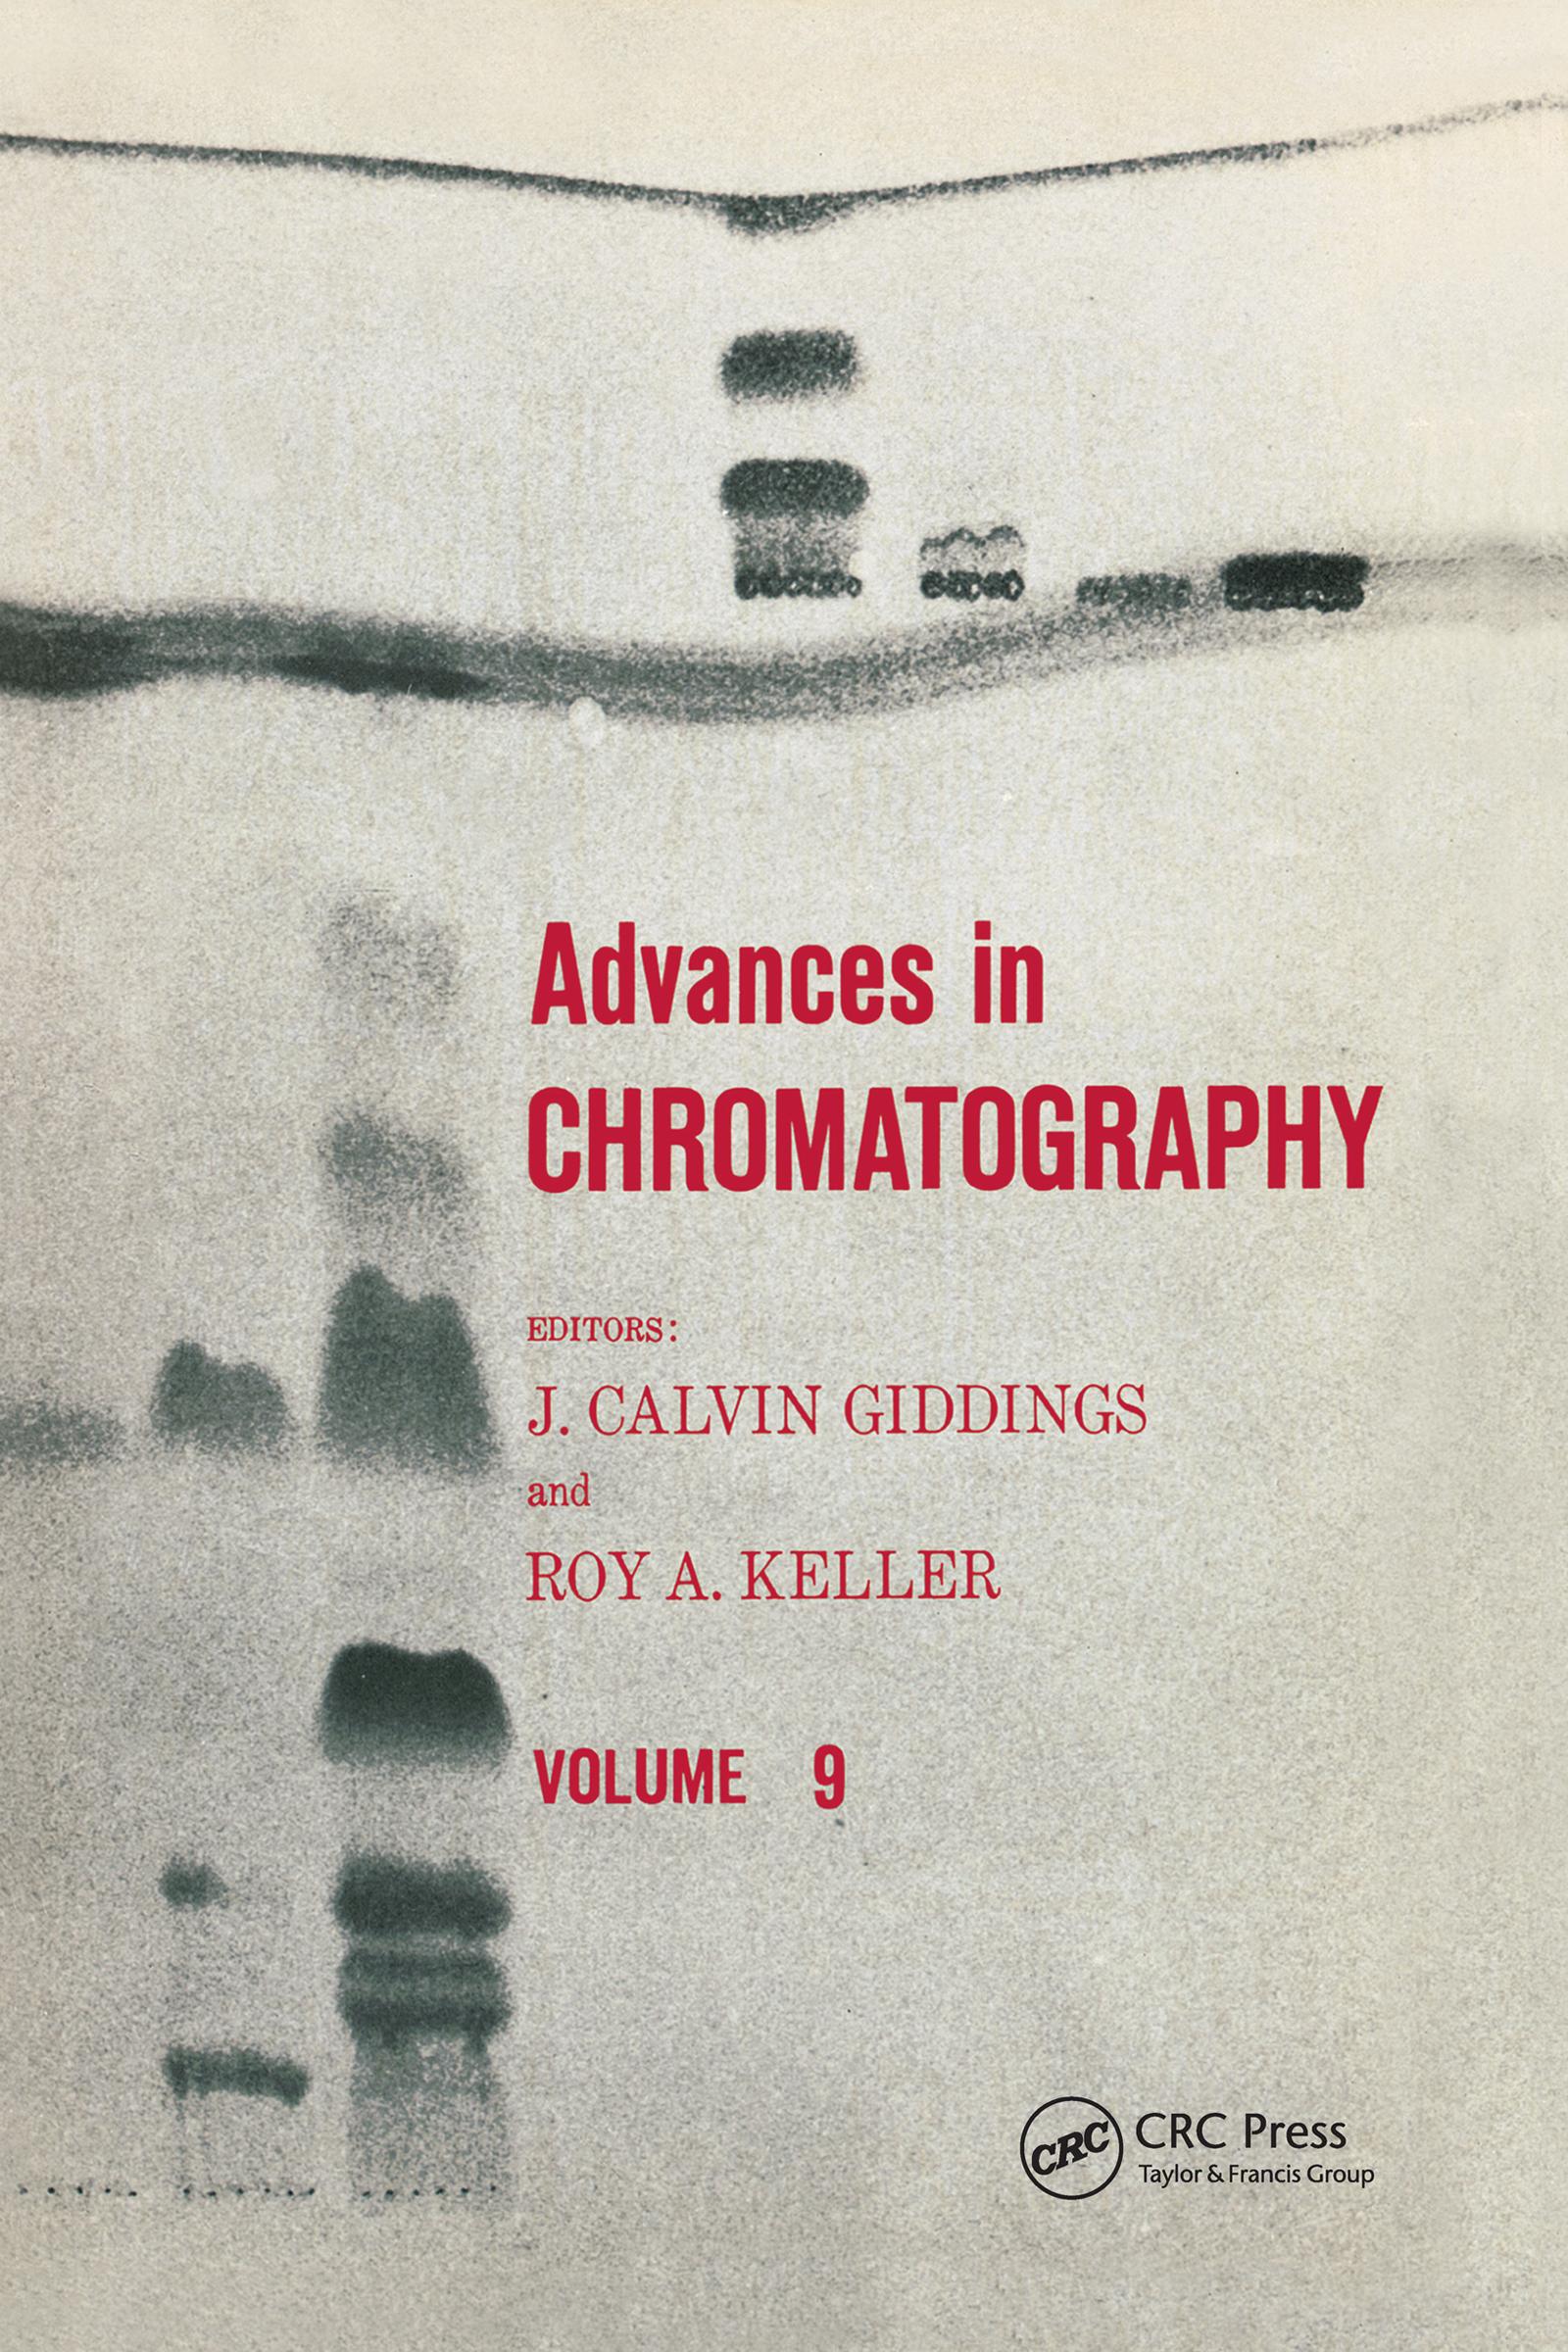 Advances in Chromatography - Giddings, Giddings